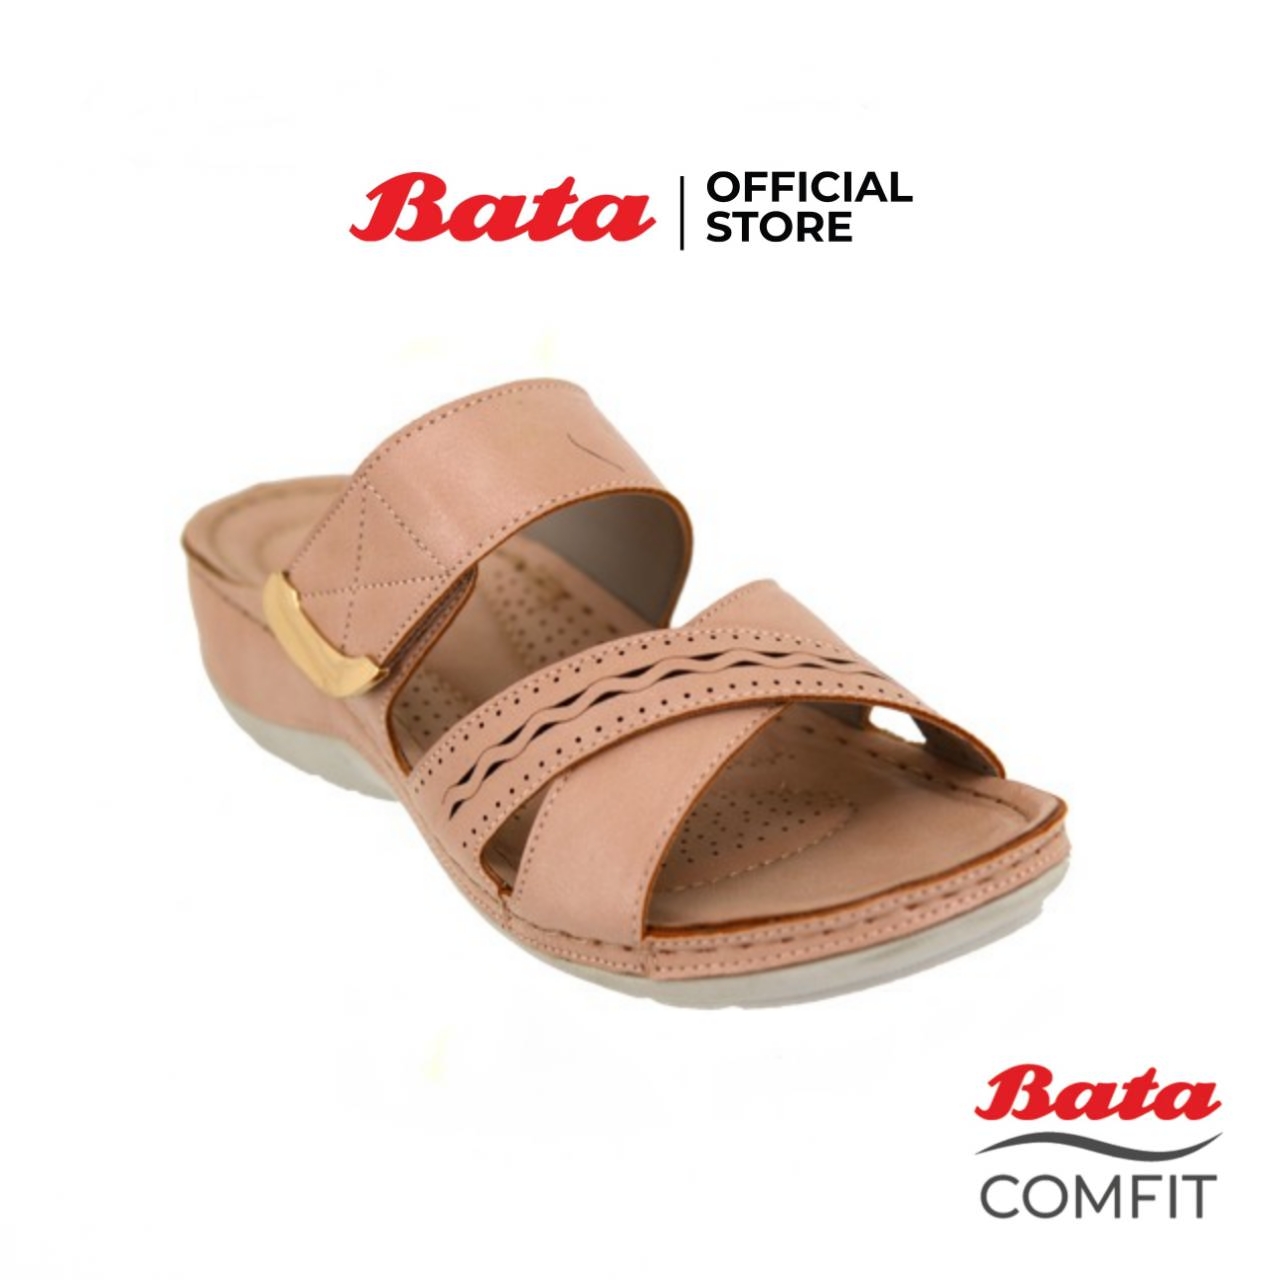 Bata COMFIT SLIP ON รองเท้าลำลองแฟชั่นสตรี แบบสวม เปิดส้น สีชมพู รหัส 6615733 / สีดำ รหัส 6616733 Ladiescomfort Fashion